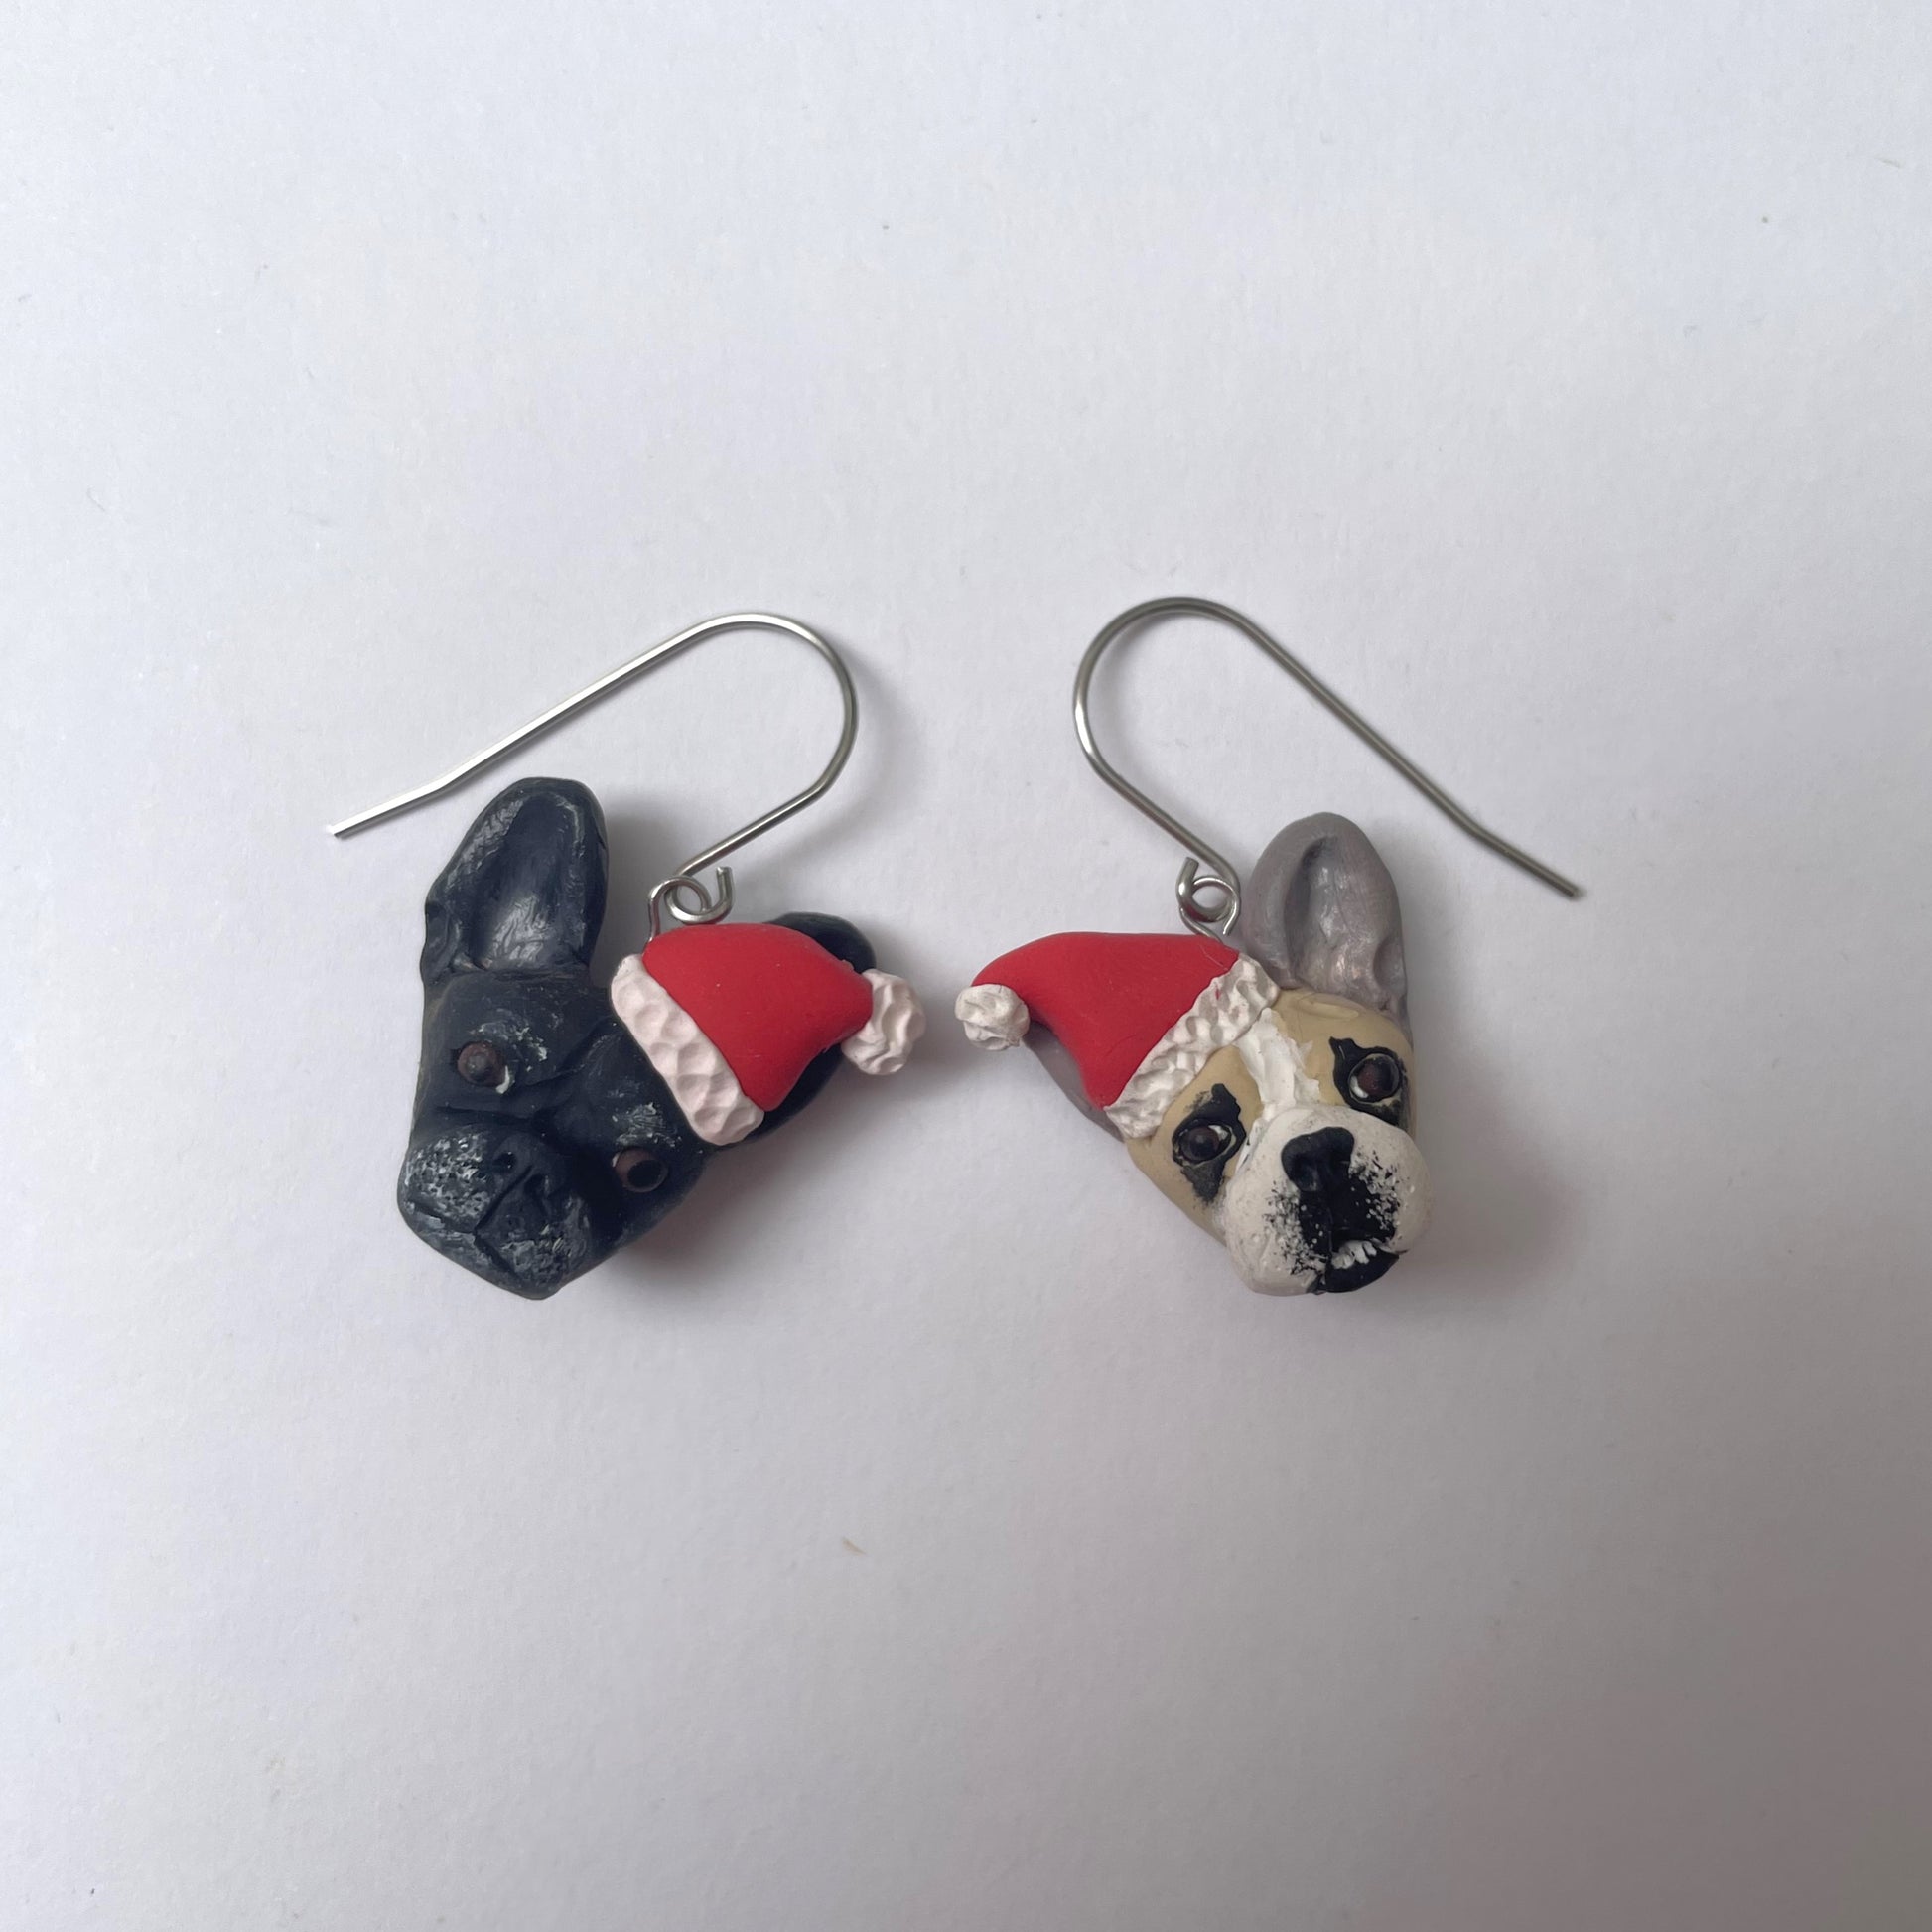 Handmade mismatched custom french bulldog hook earrings wearing santa hats.